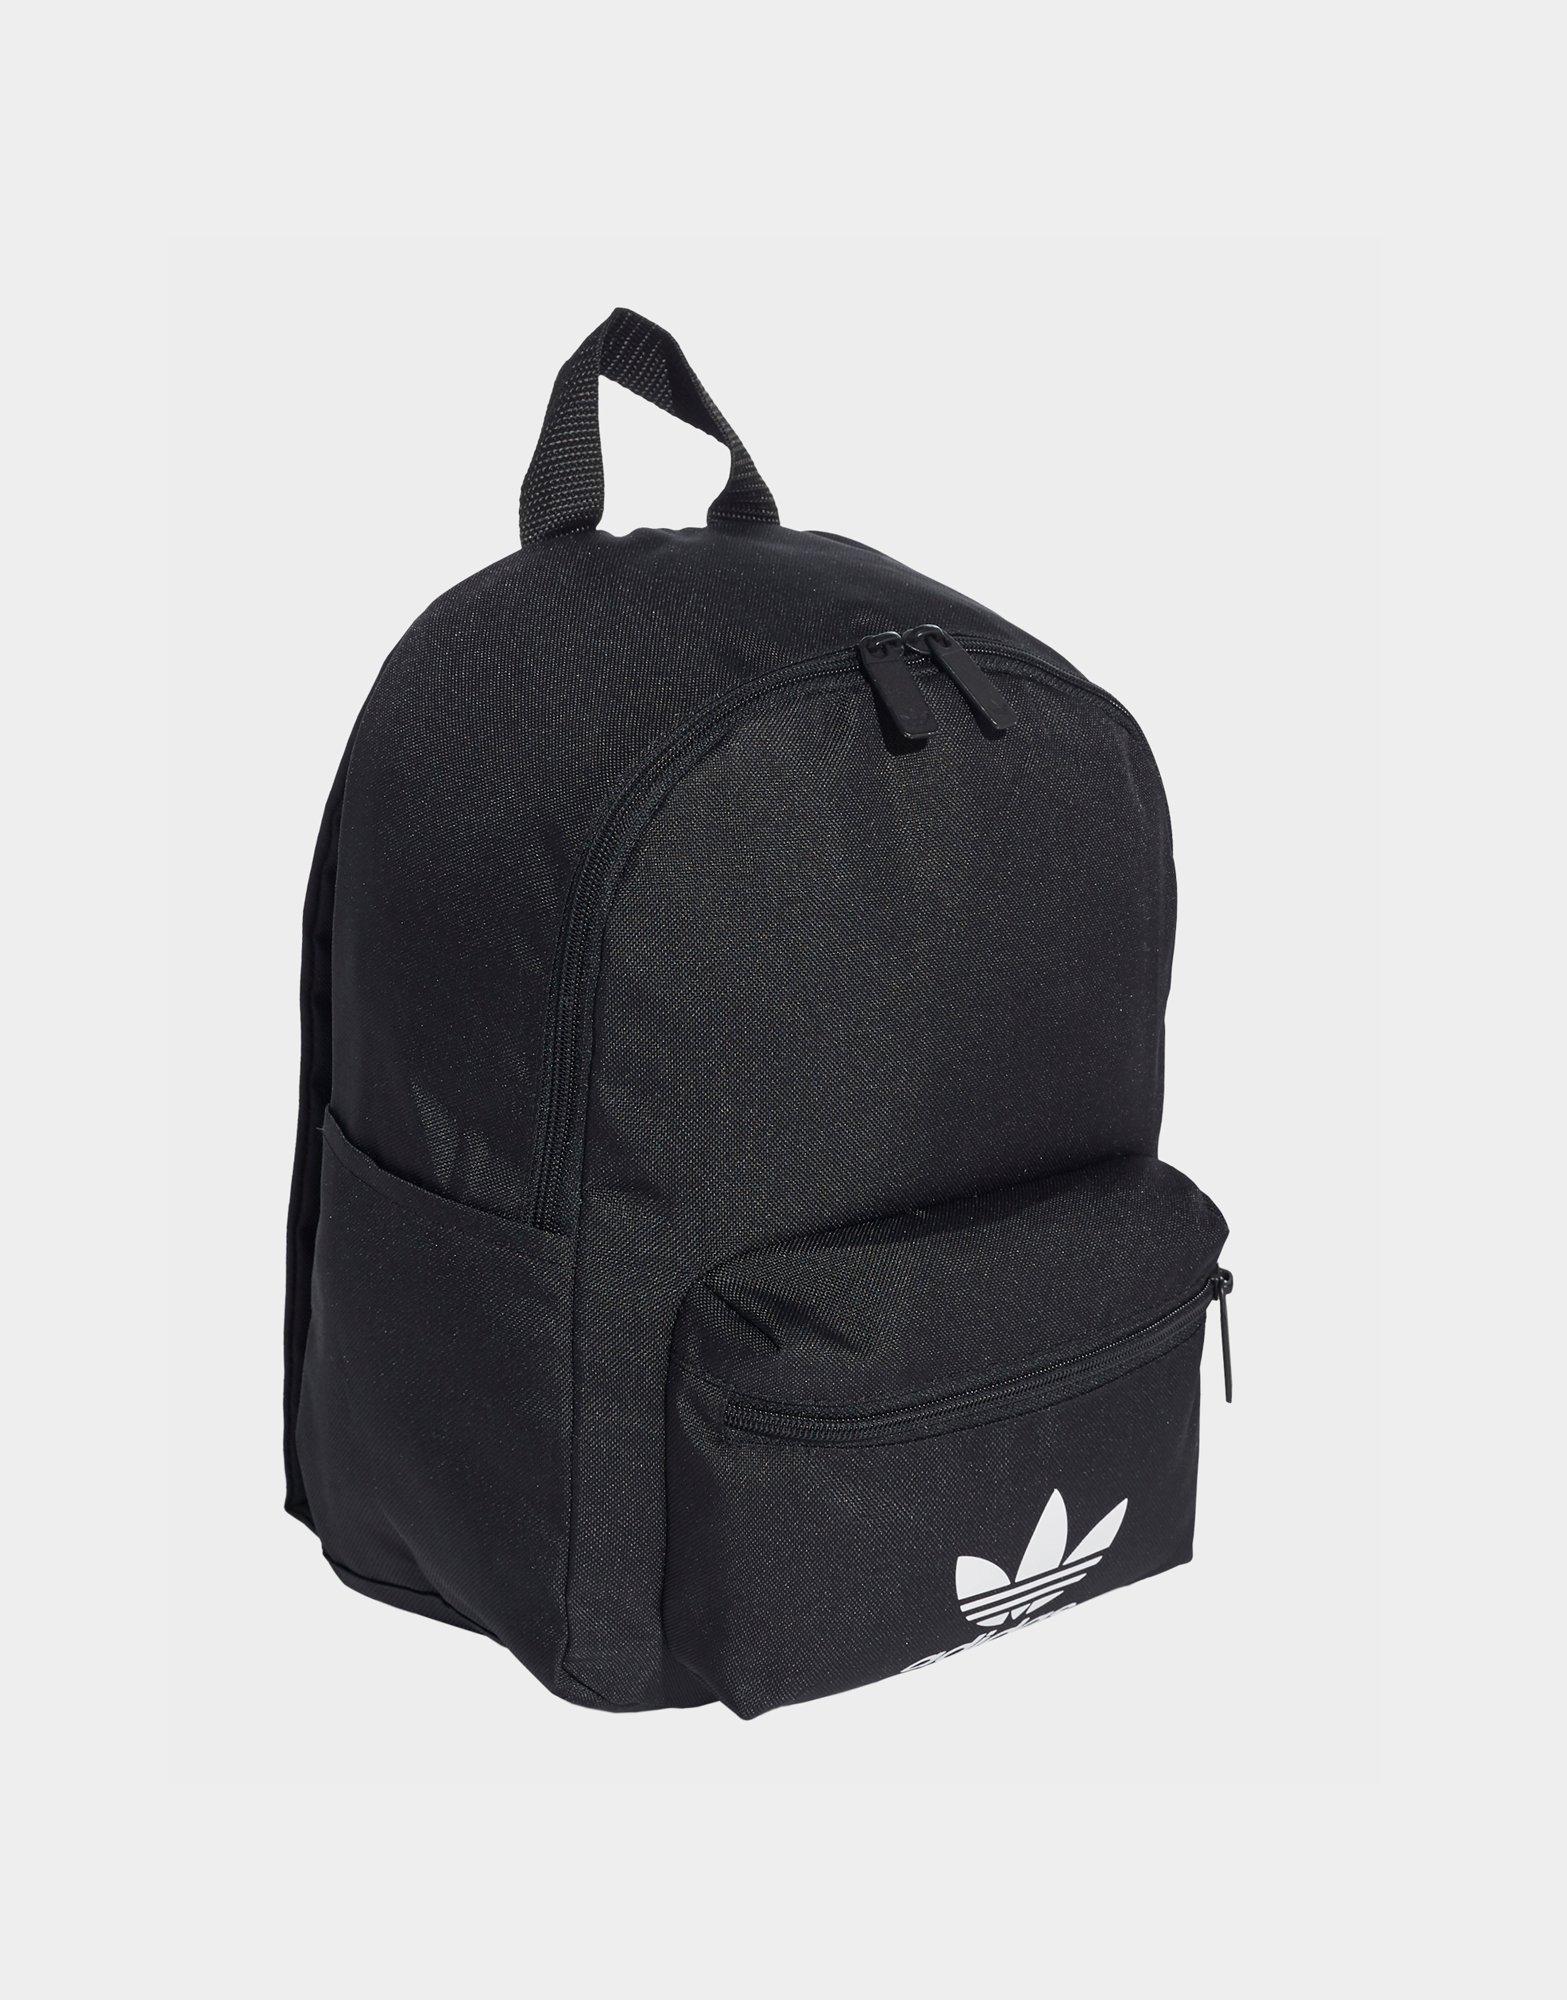 adidas classic adicolor backpack